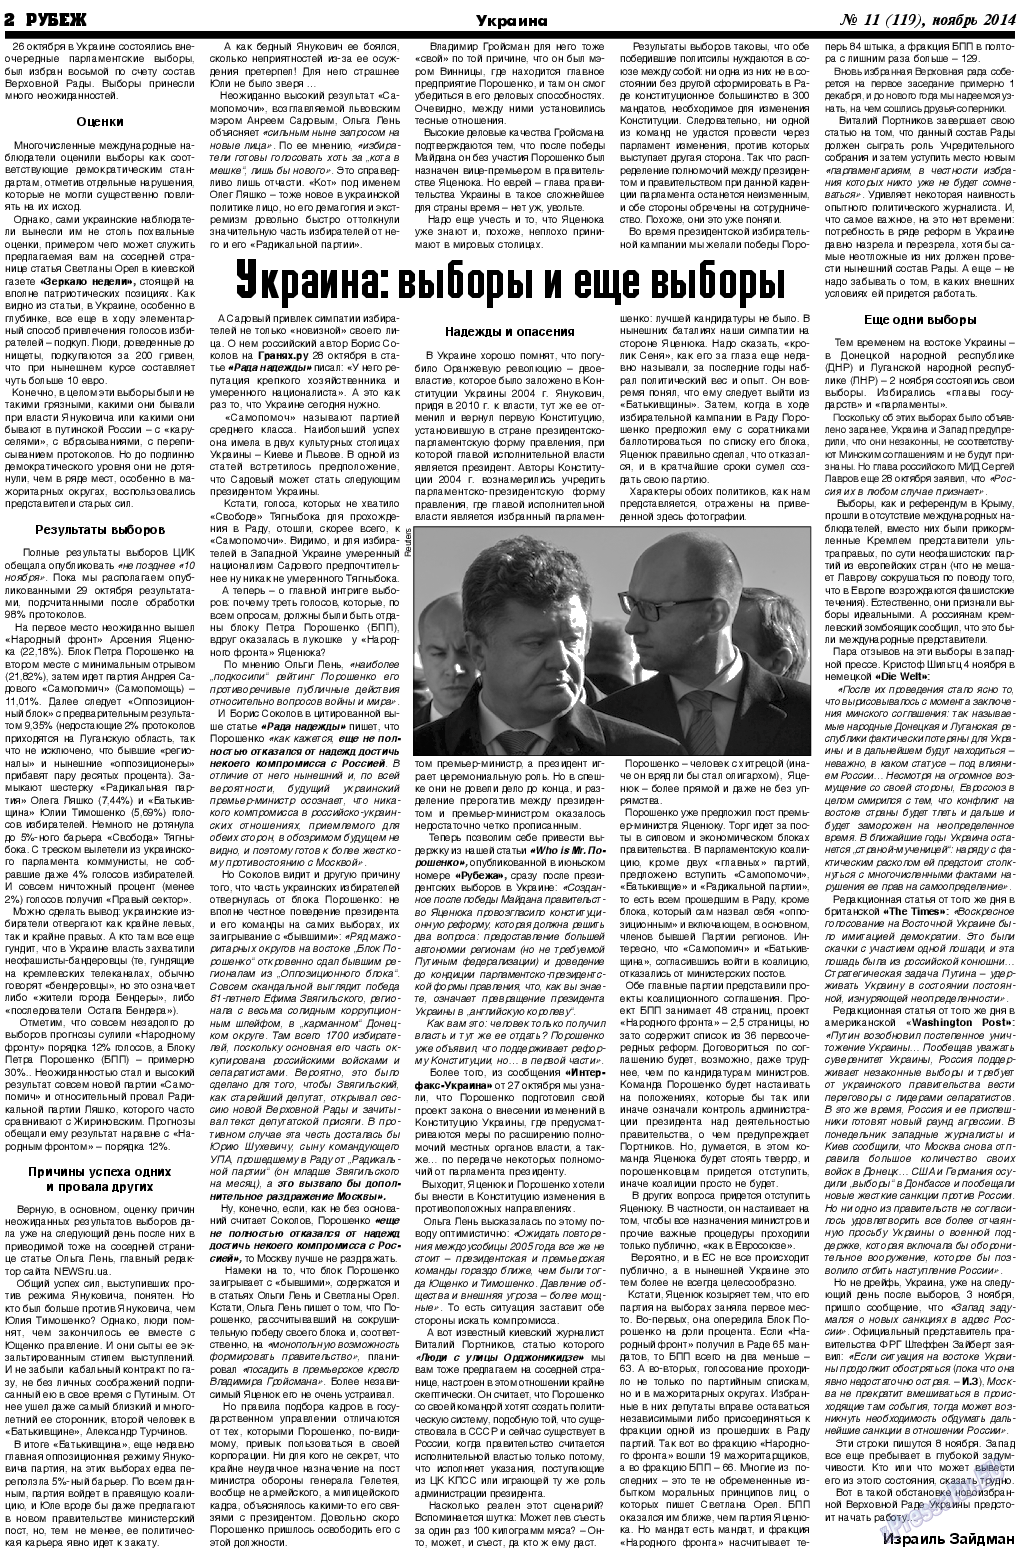 Рубеж, газета. 2014 №11 стр.2